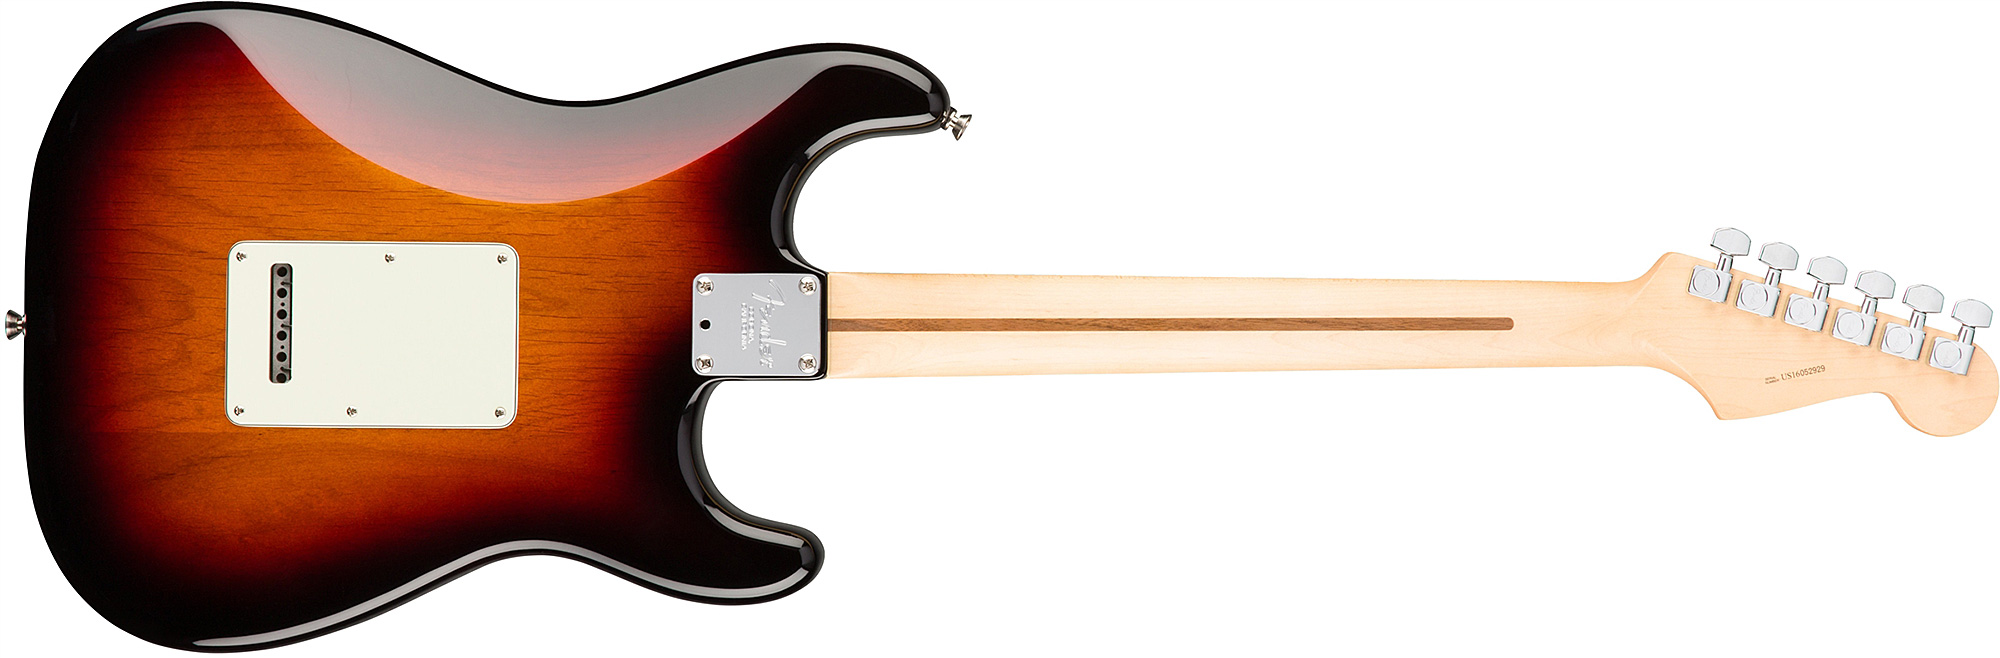 Fender Strat American Professional Lh Usa Gaucher 3s Rw - 3-color Sunburst - Left-handed electric guitar - Variation 1